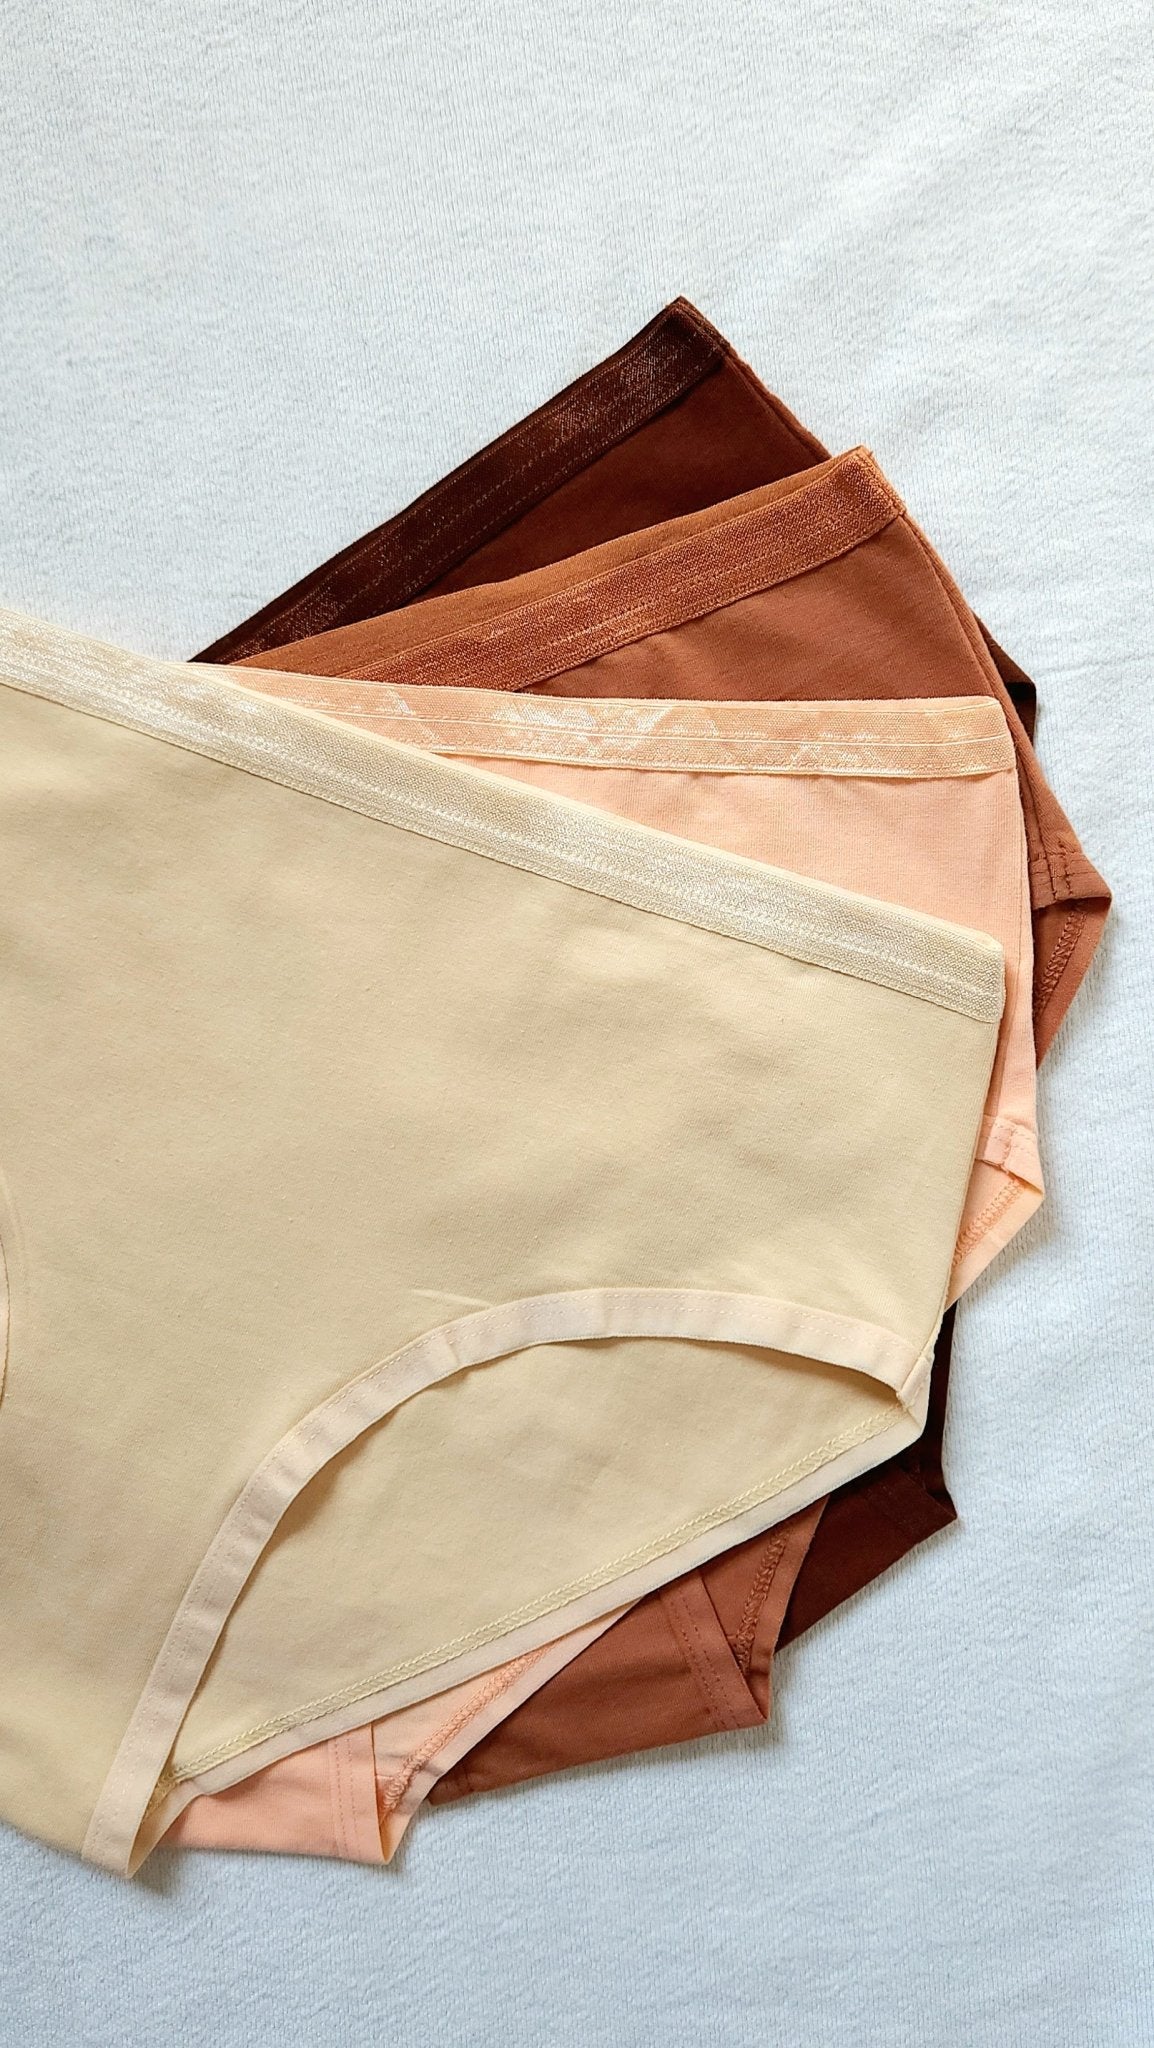 Person in Skintone Underwear · Free Stock Photo